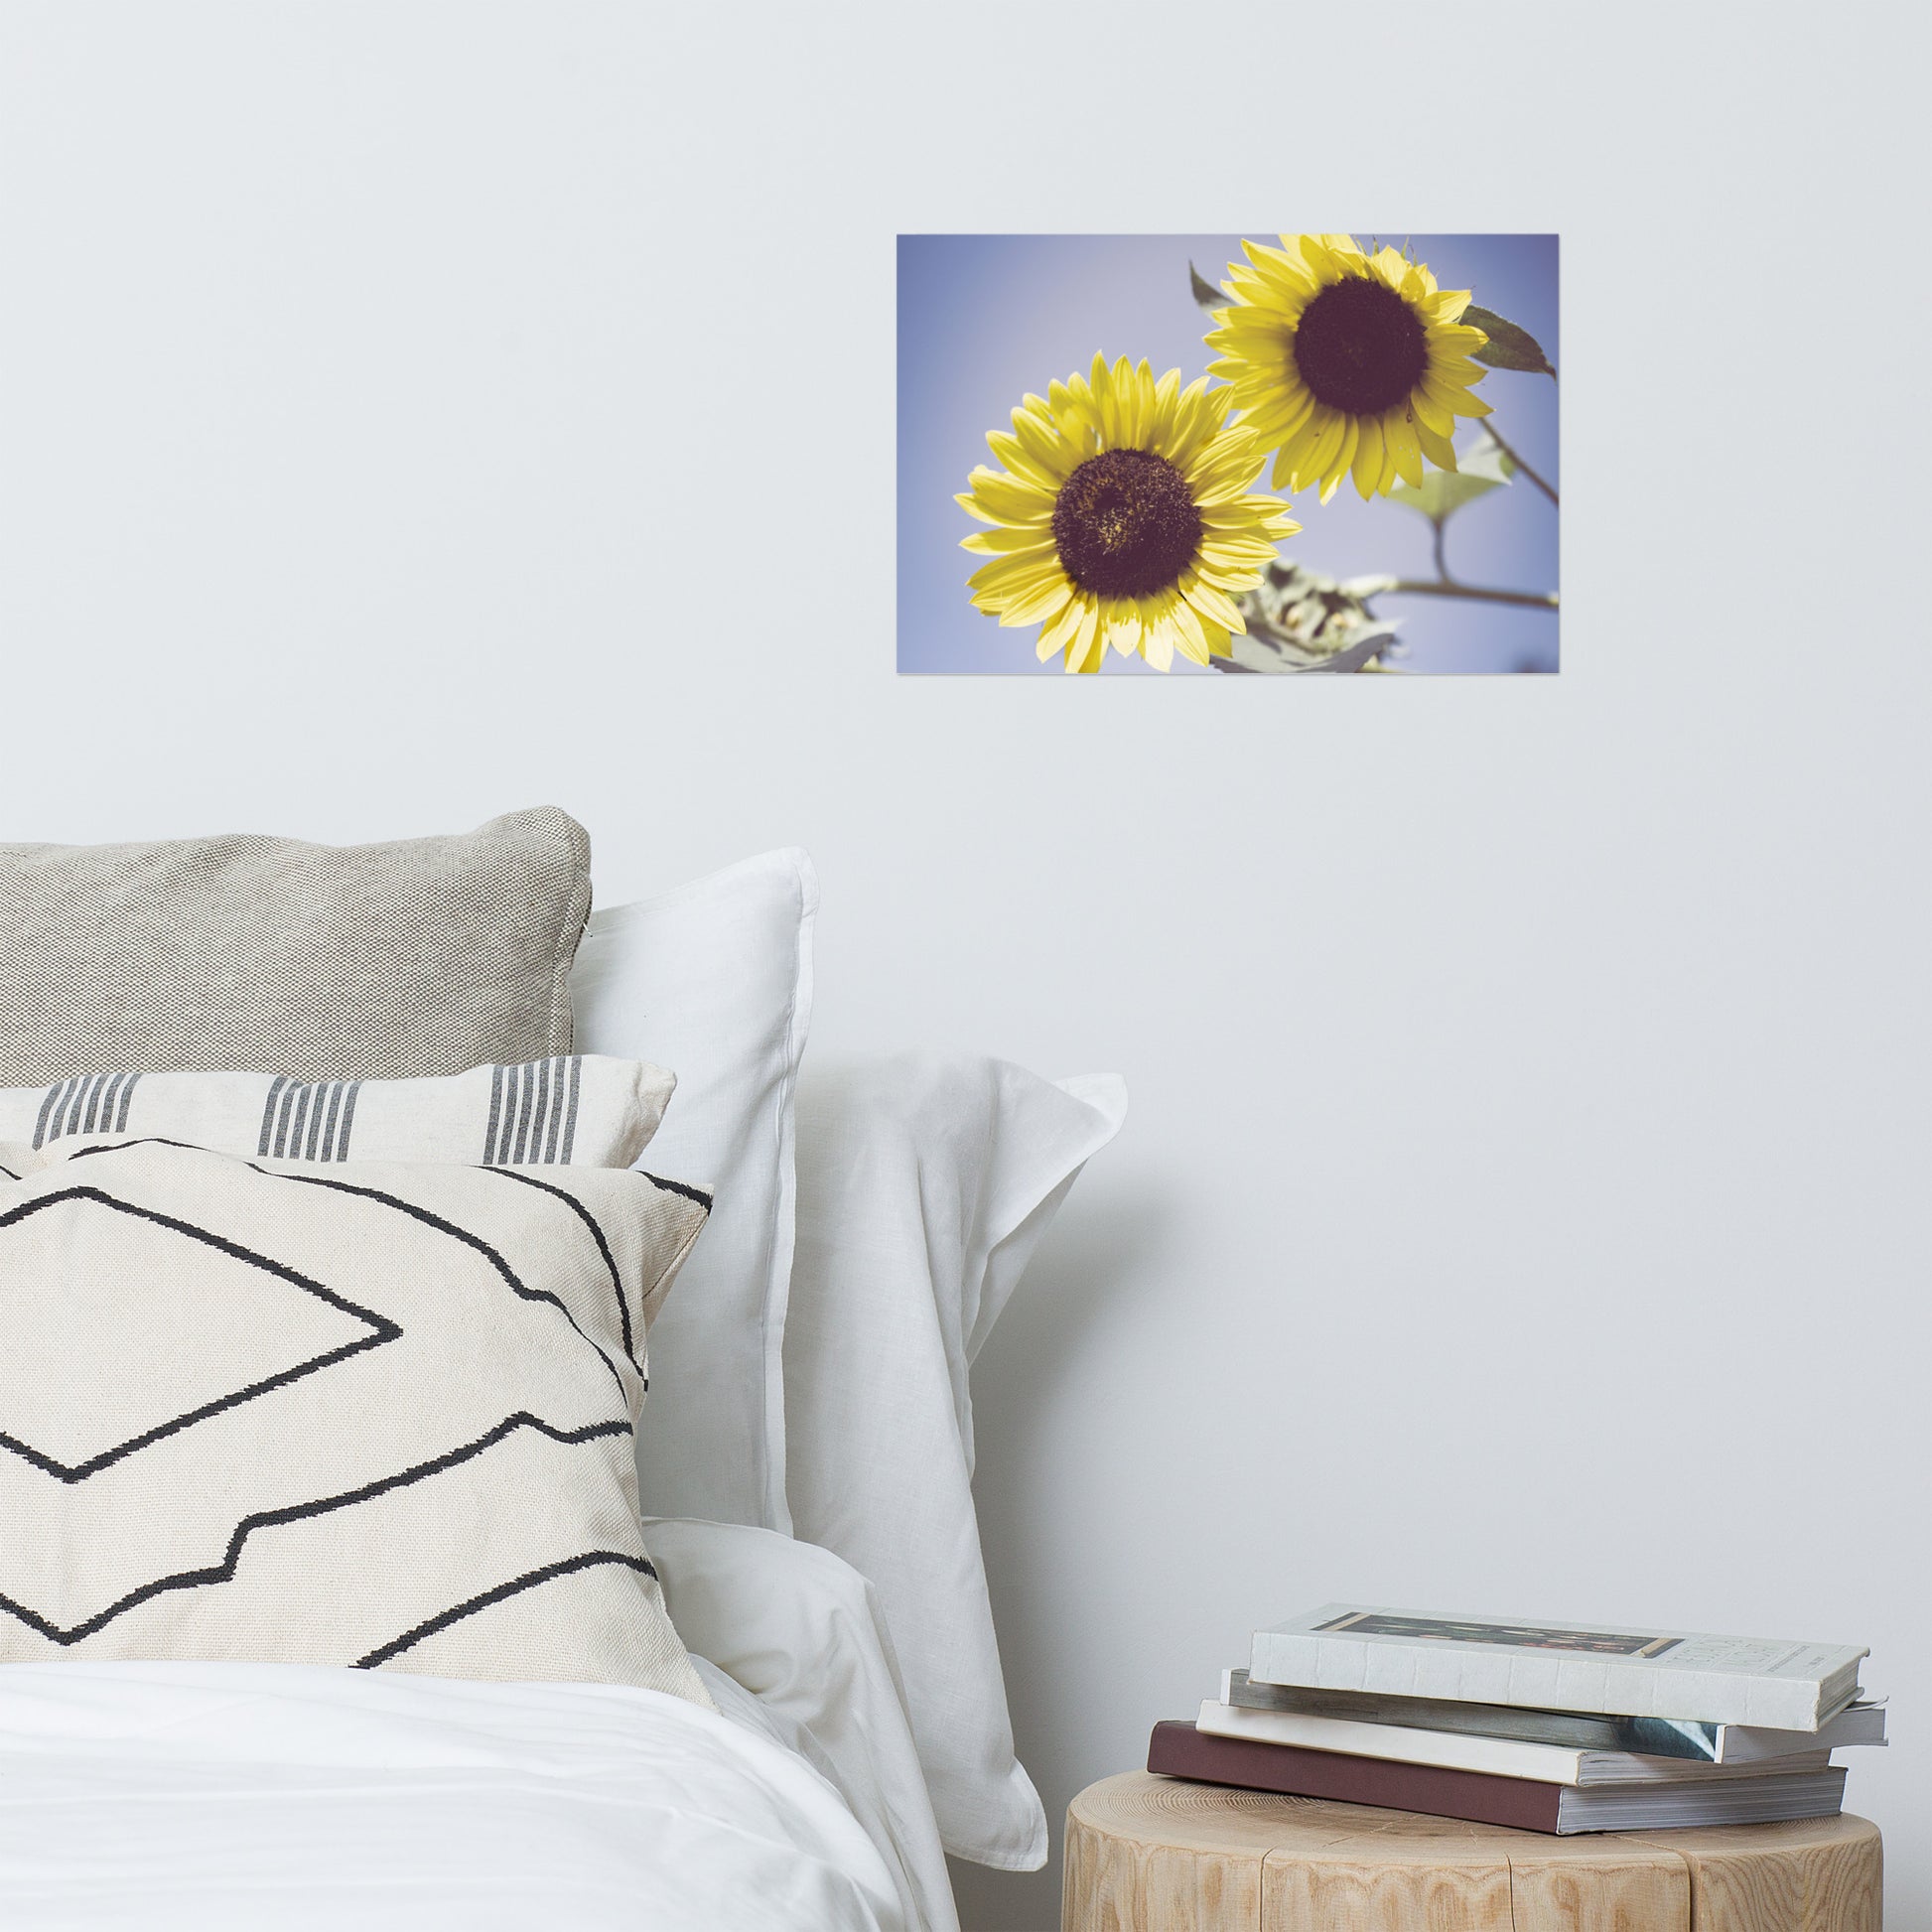 Minimalist Floral Wall Art: Aged Sunflowers Against Sky - Botanical / Floral / Flora / Flowers / Nature Photograph Loose / Unframed / Frameable / Frameless Wall Art Print - Artwork